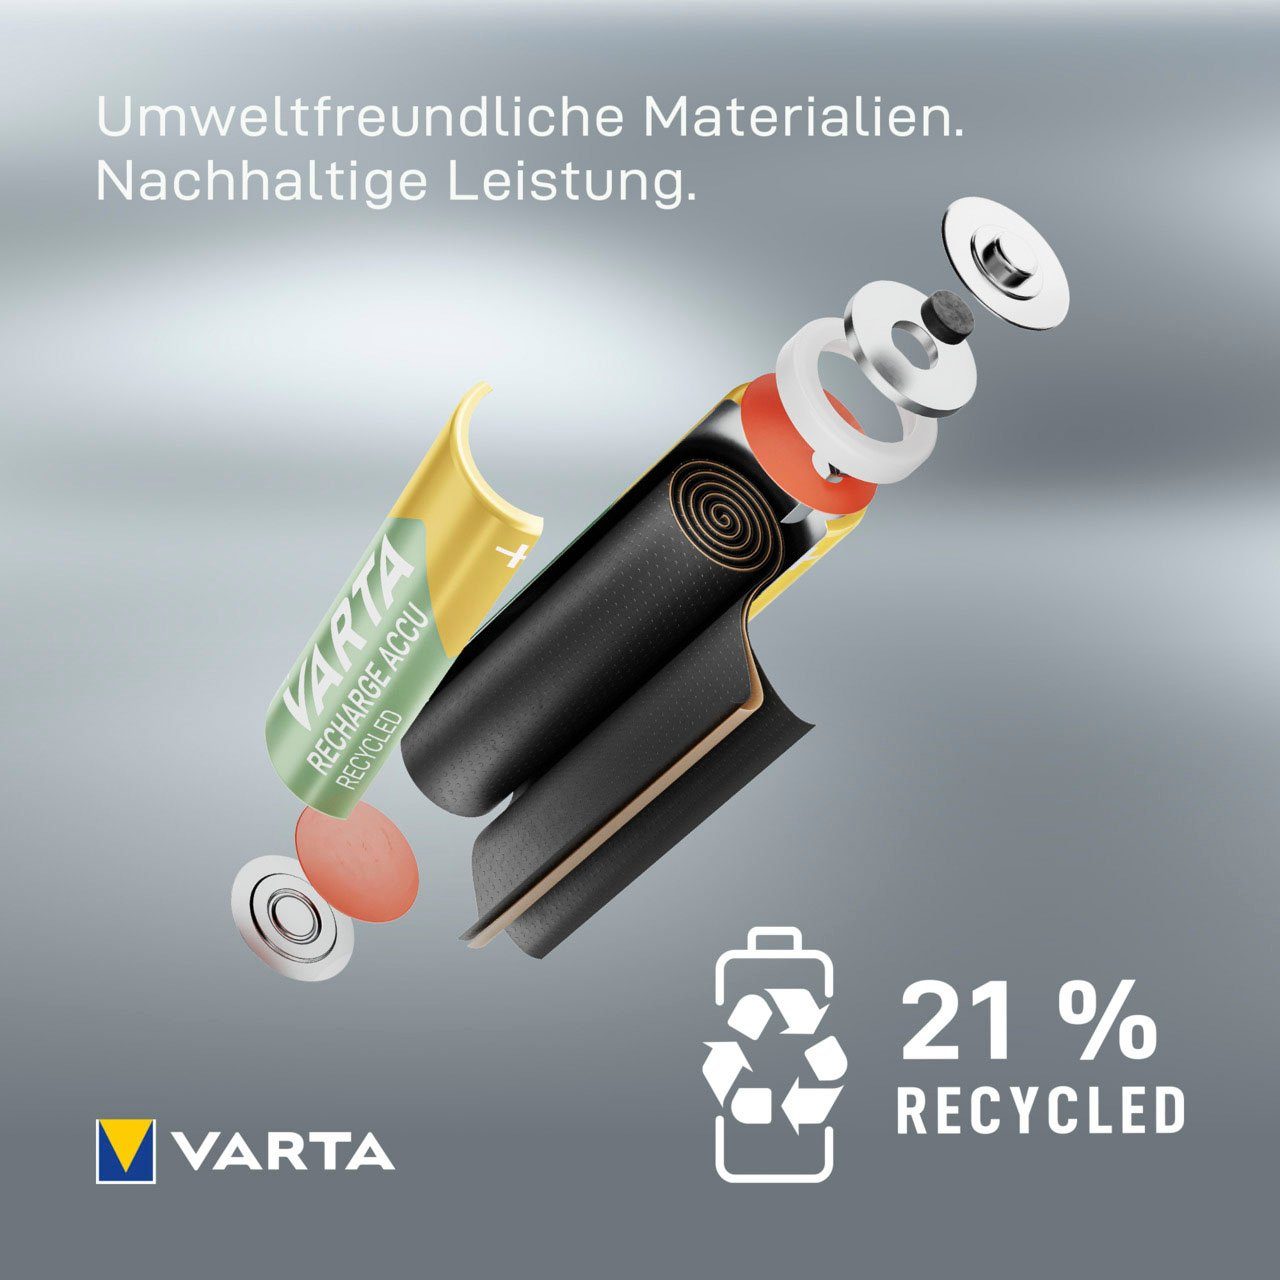 4 Recycled 800 V, Akkus Akku mAh wiederaufladbar (1,2 Recharge wiederauflaudbare VARTA St), VARTA Micro Accu